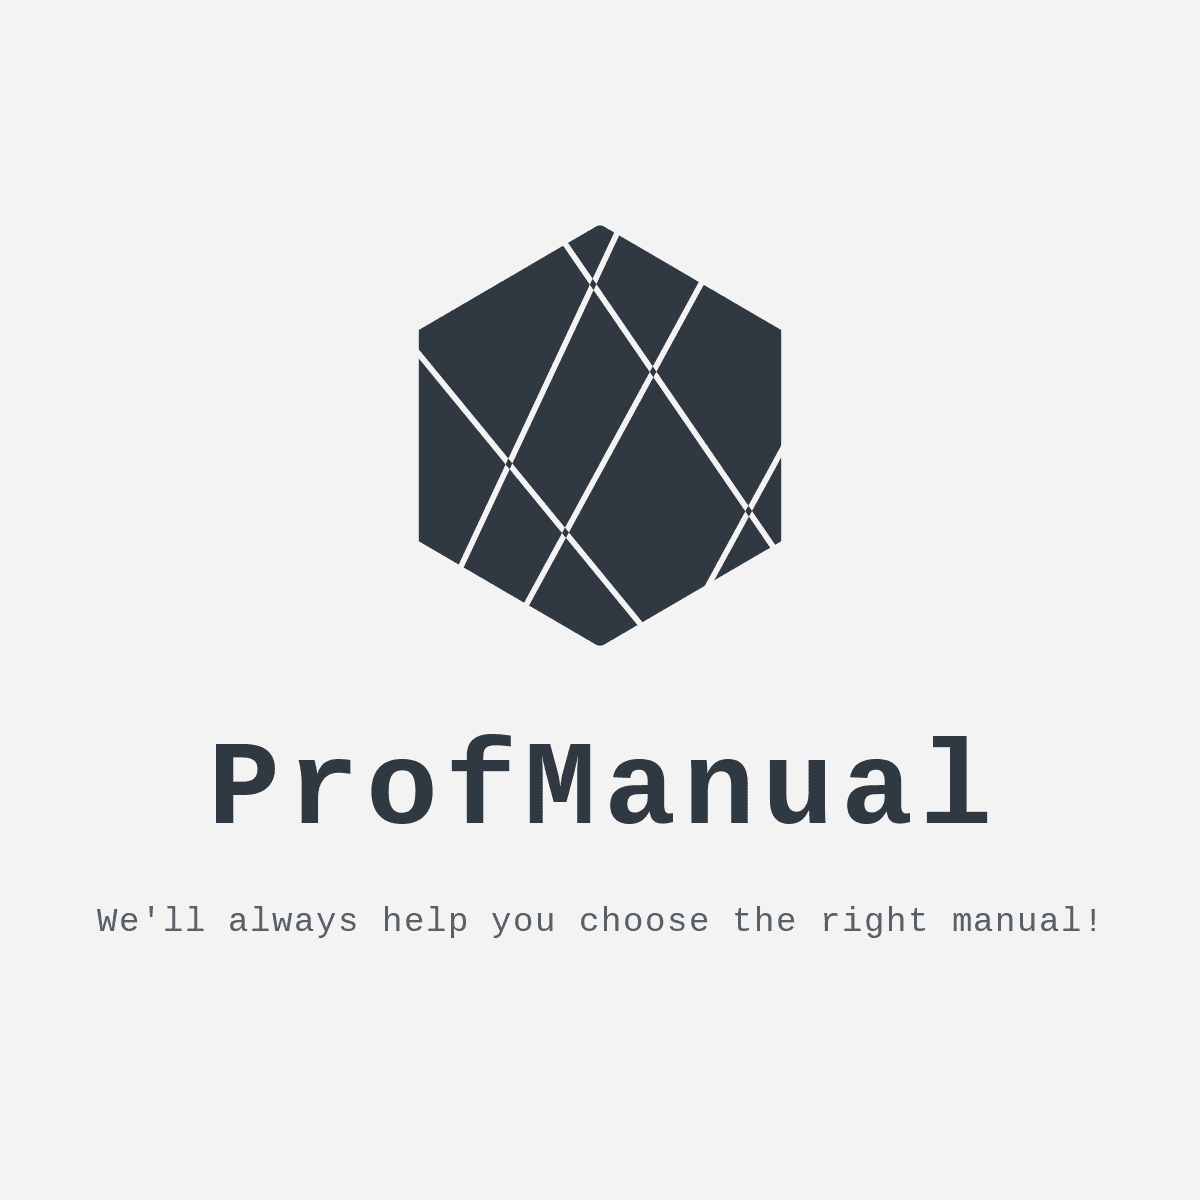 company Profmanual sell technical manuals